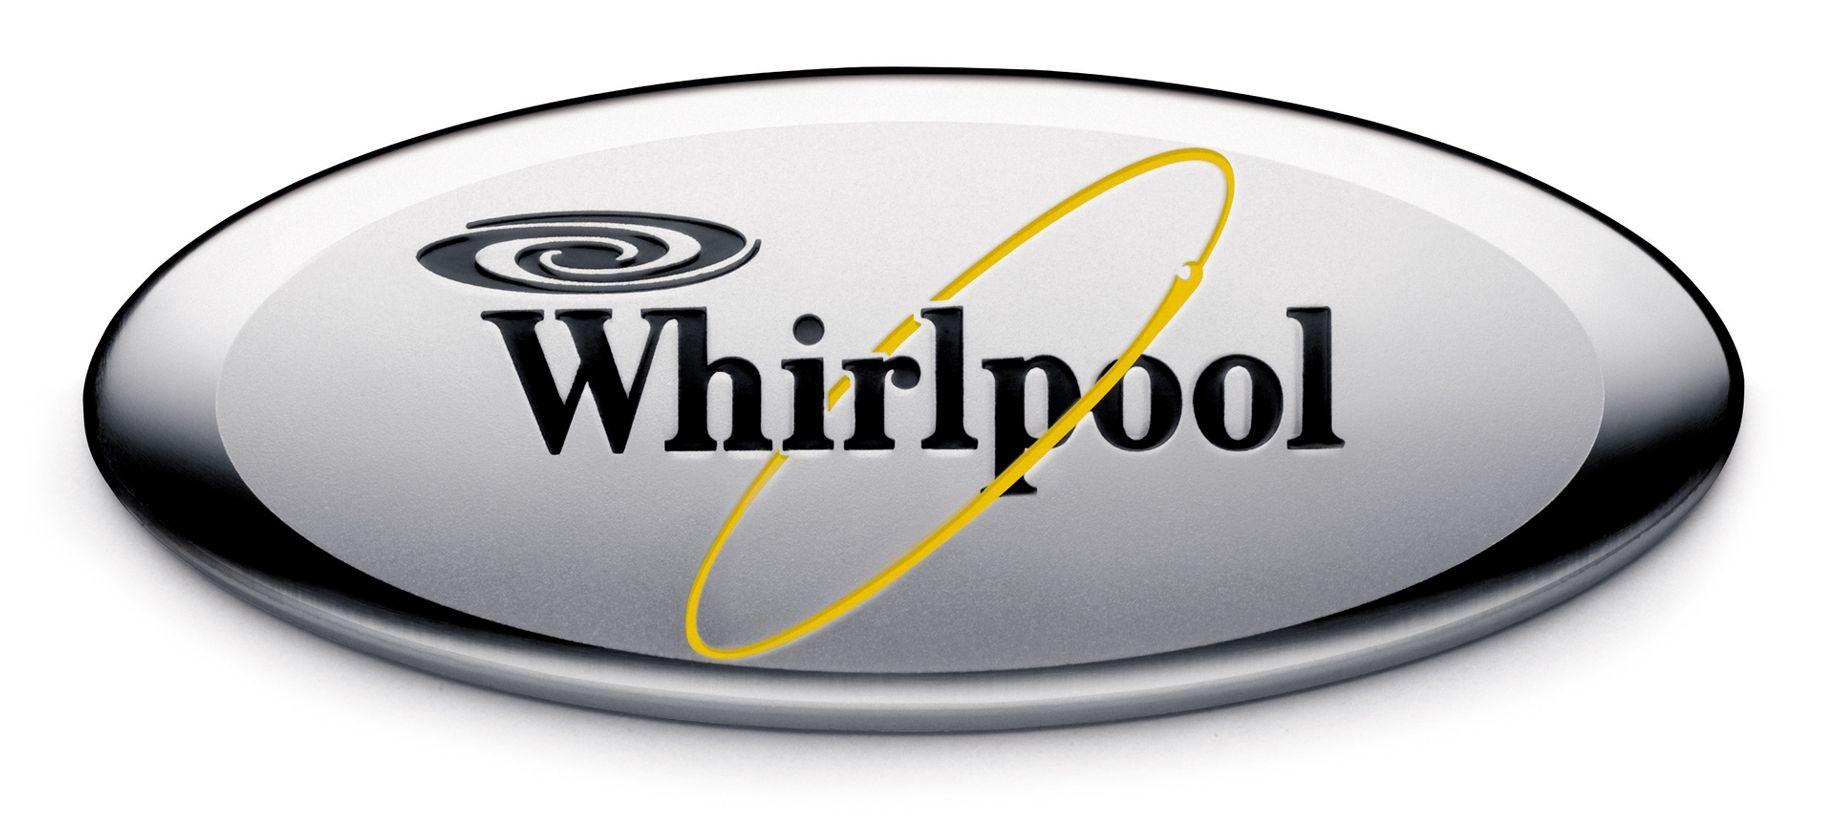 Wirlpool Logo - Whirlpool logo « Logos of brands